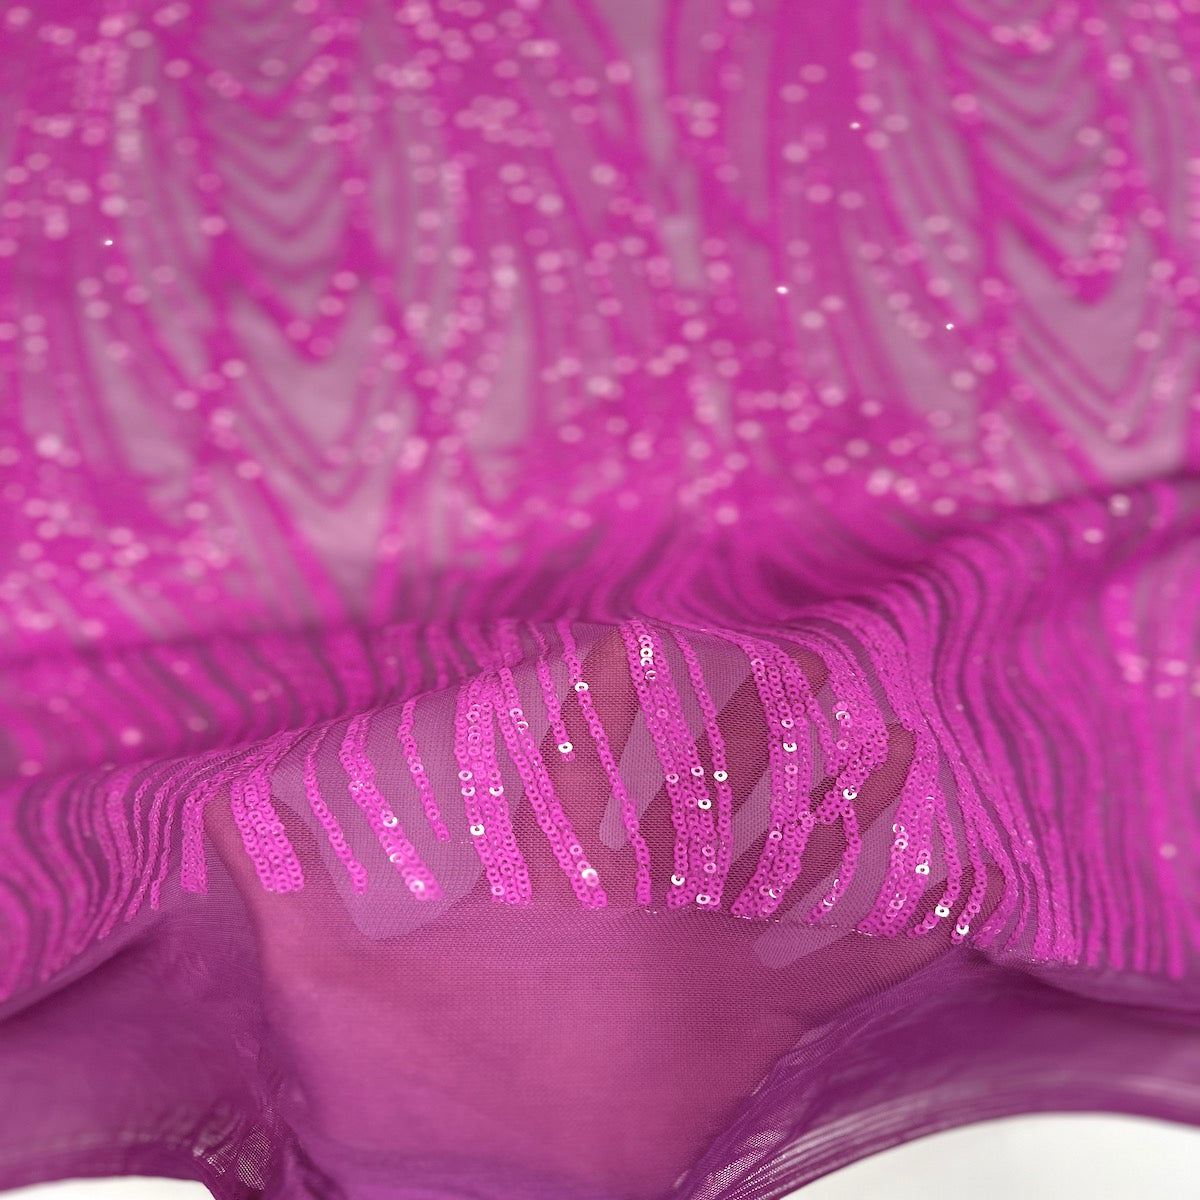 Tela de encaje de lentejuelas elásticas con ondas Selena rosa magenta 